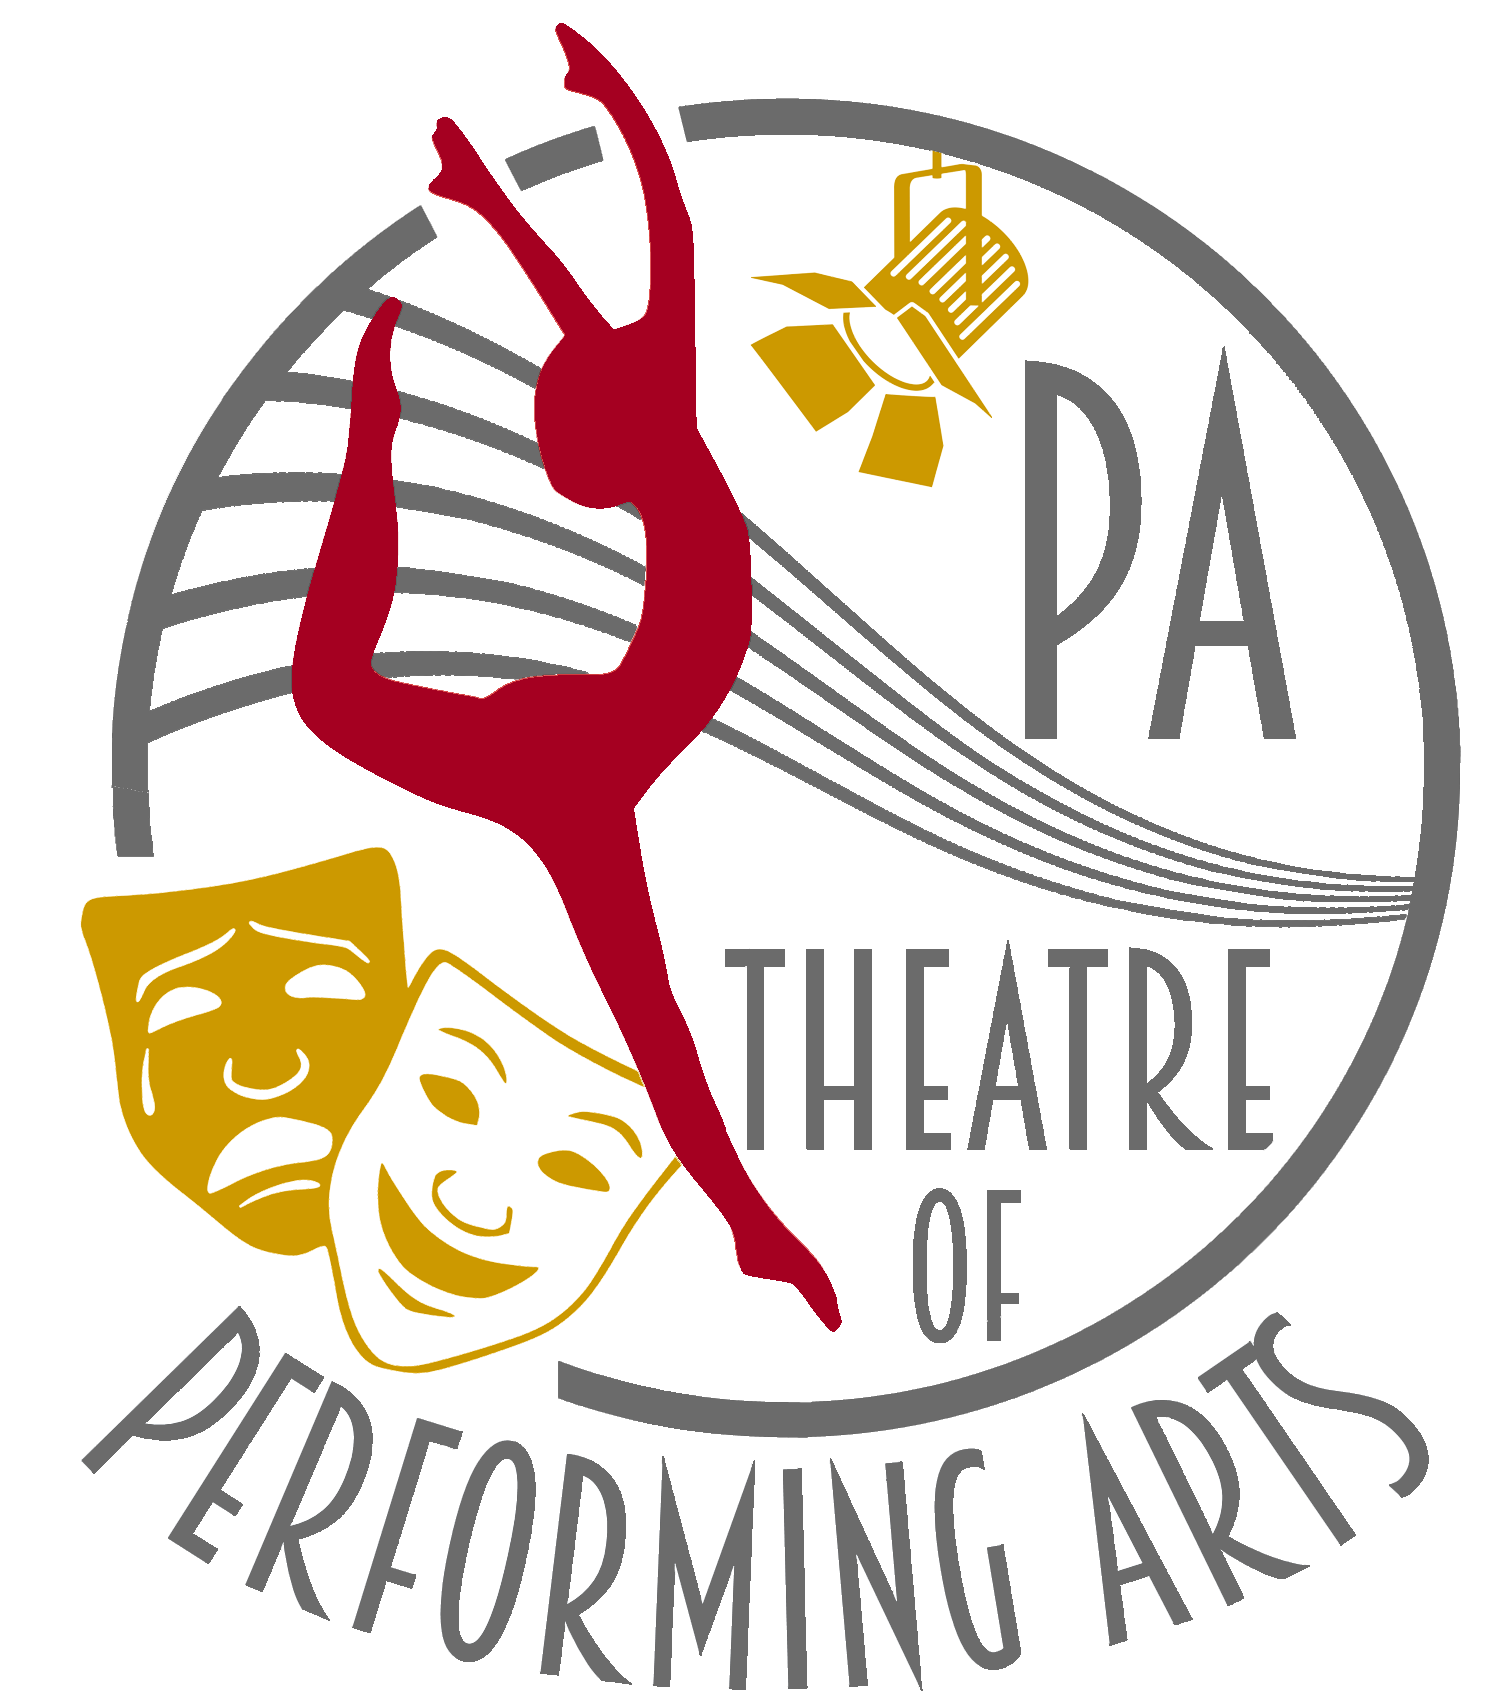 Pennsylvania Theatre of Performing Arts logo